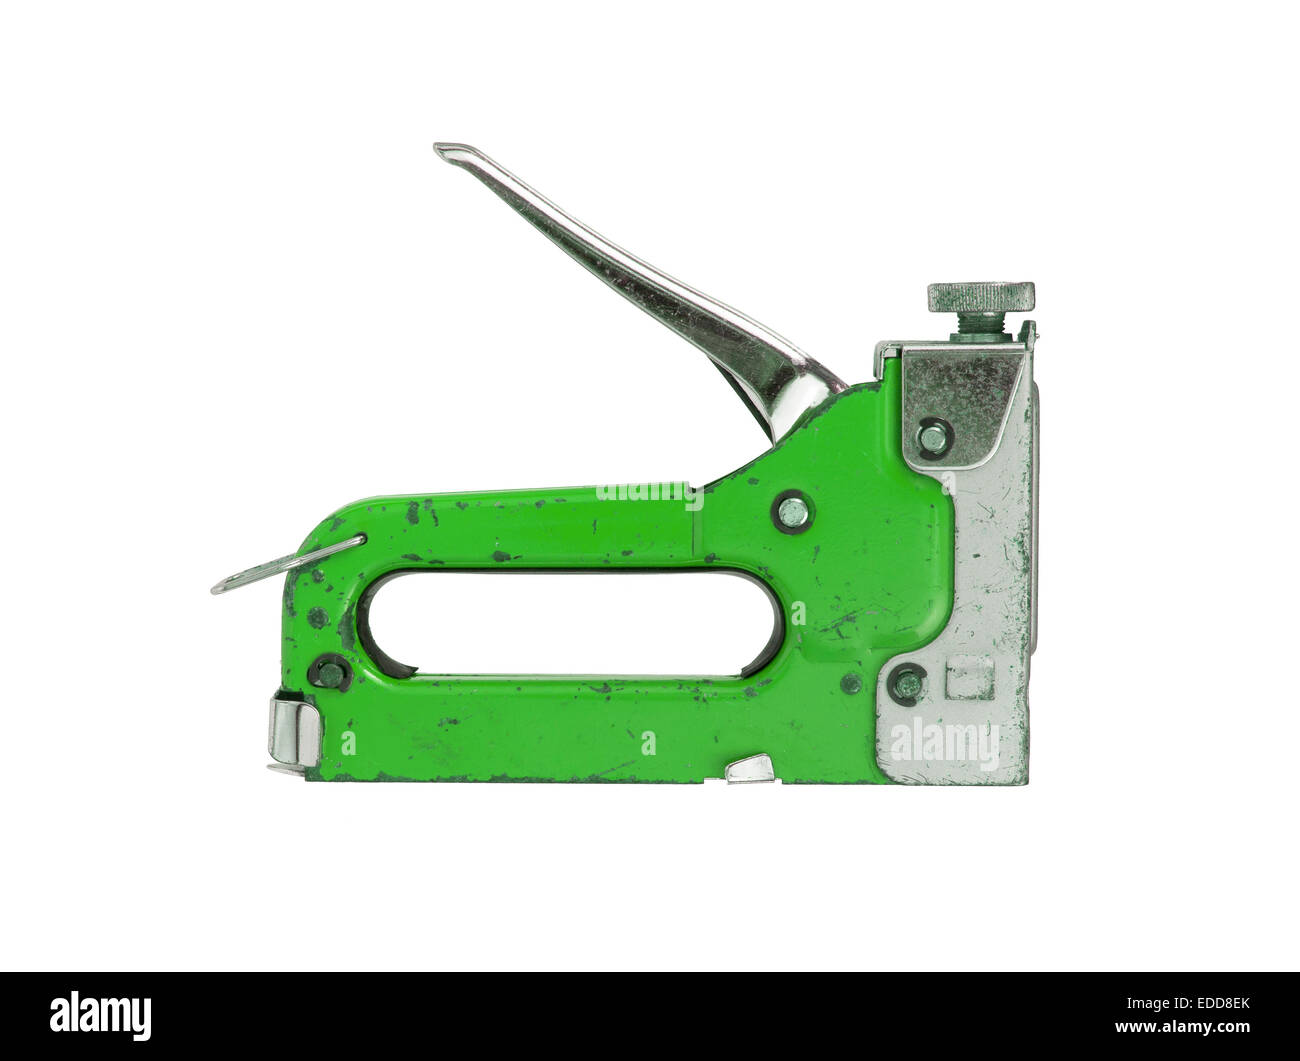 Construction hand-held stapler, isolated on white background, green Stock Photo